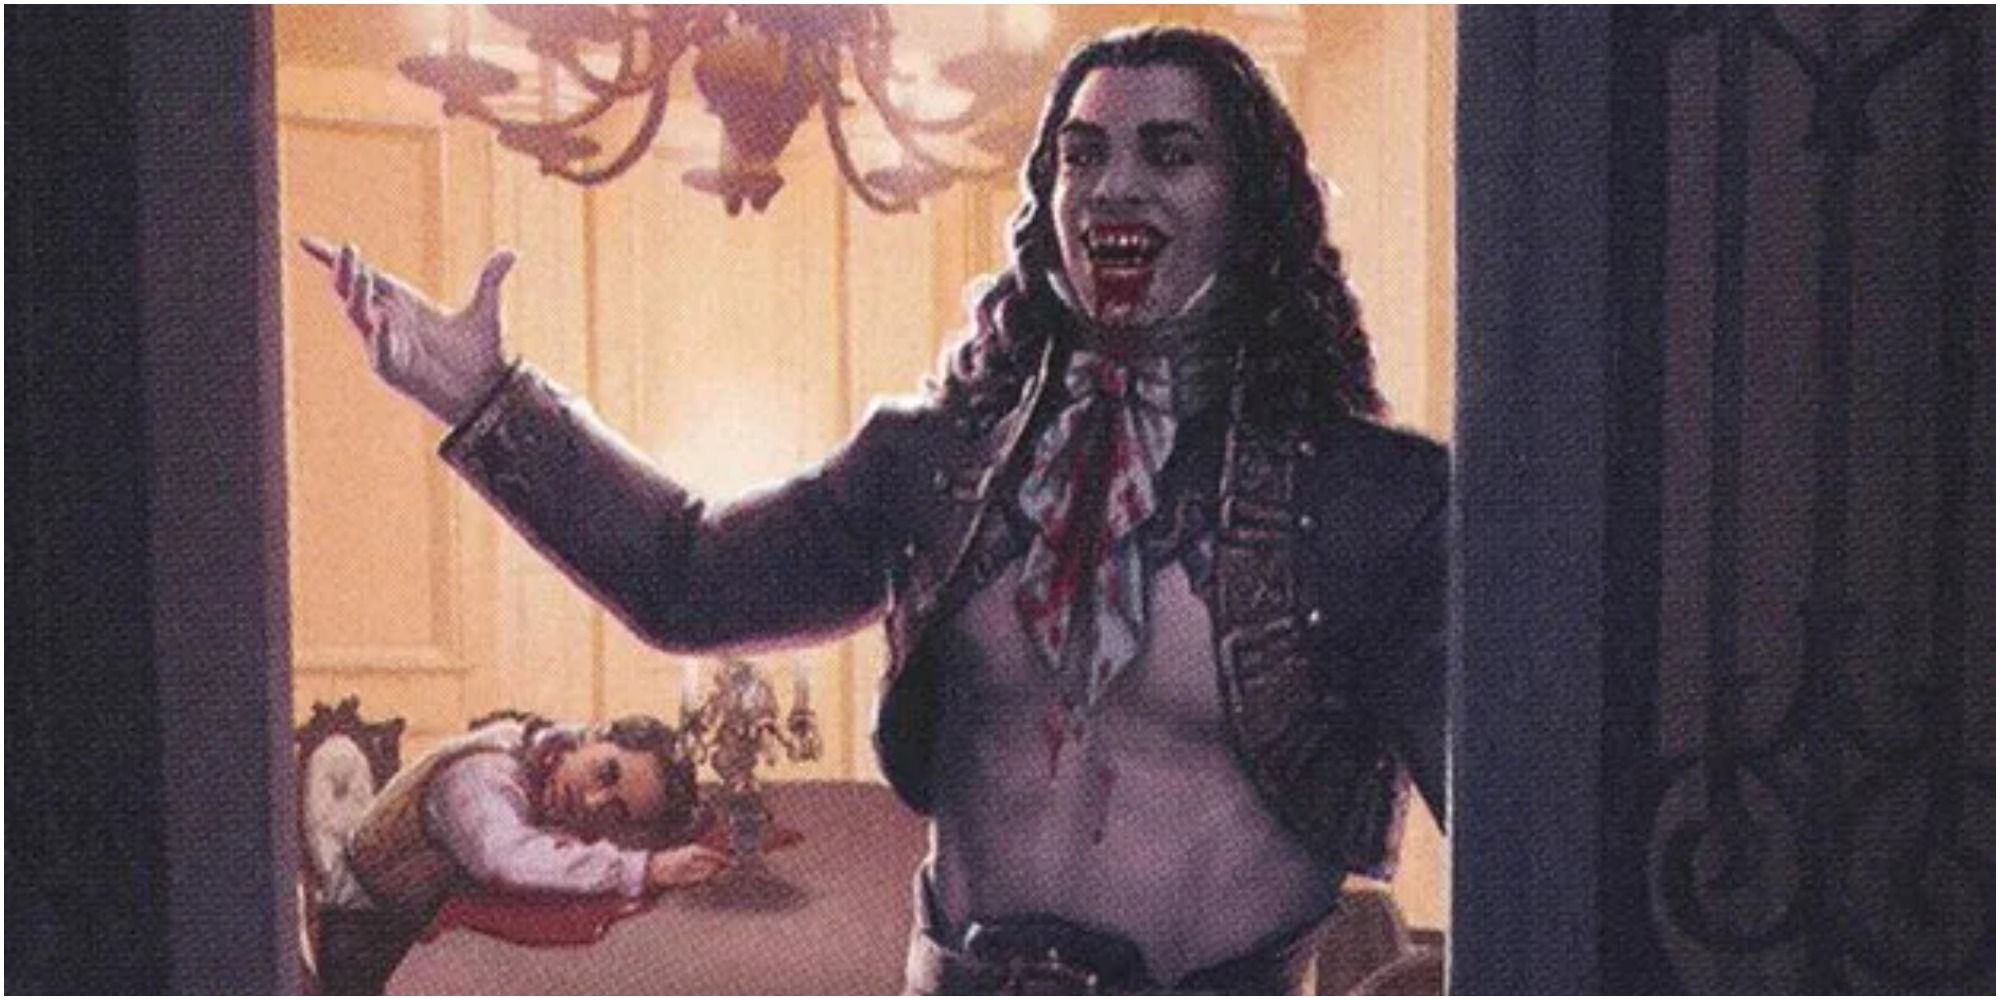 Cordial Vampire by Winona Nelson